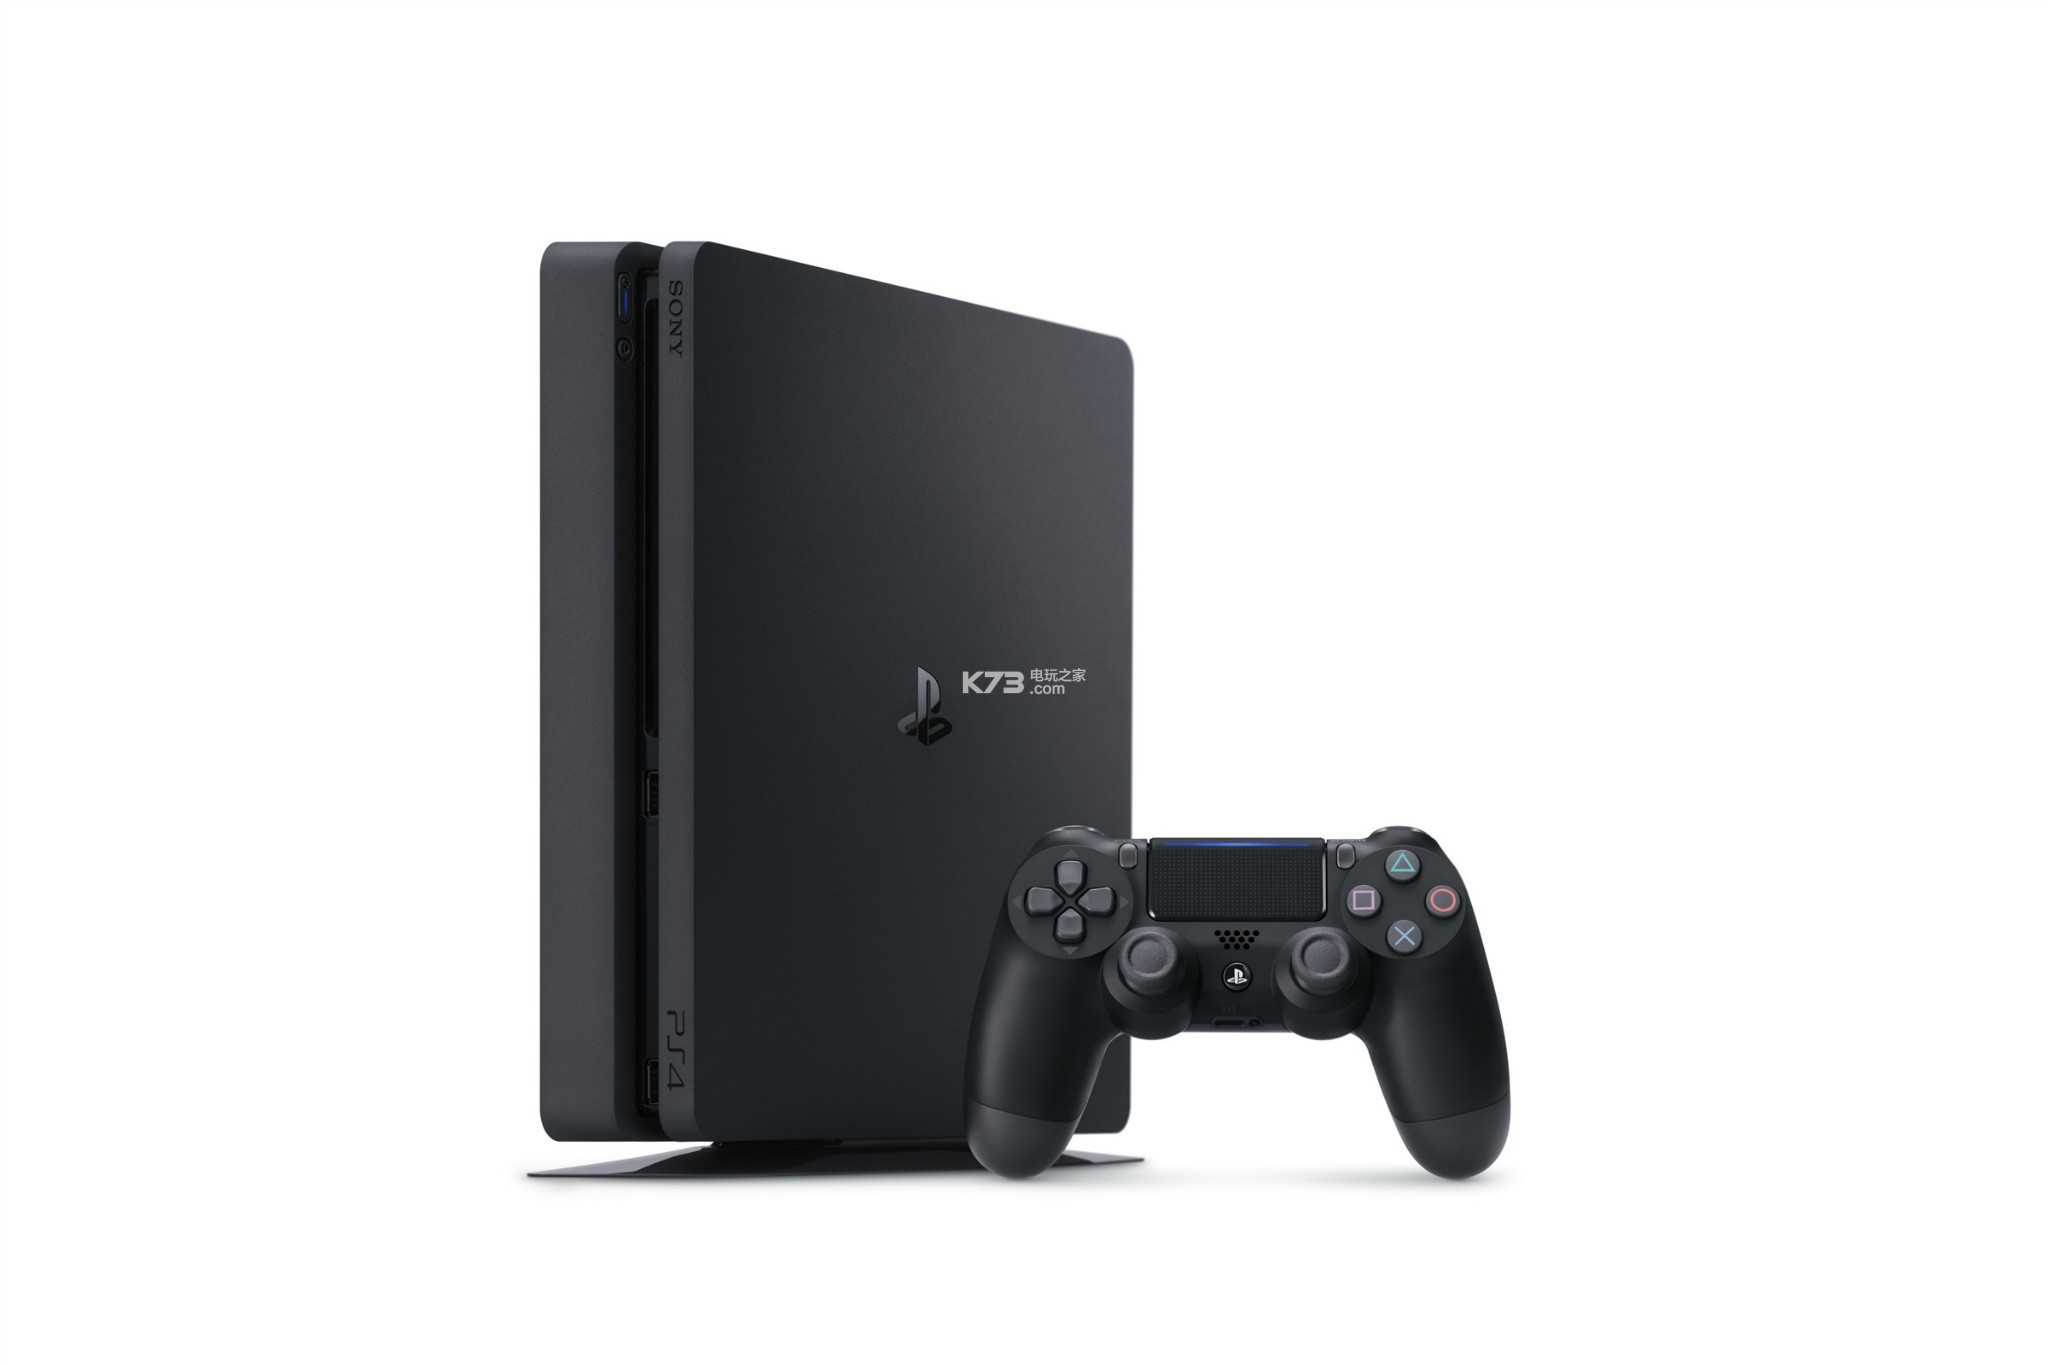 PS4 Slim售价&上市日期等详情公开 _k73电玩